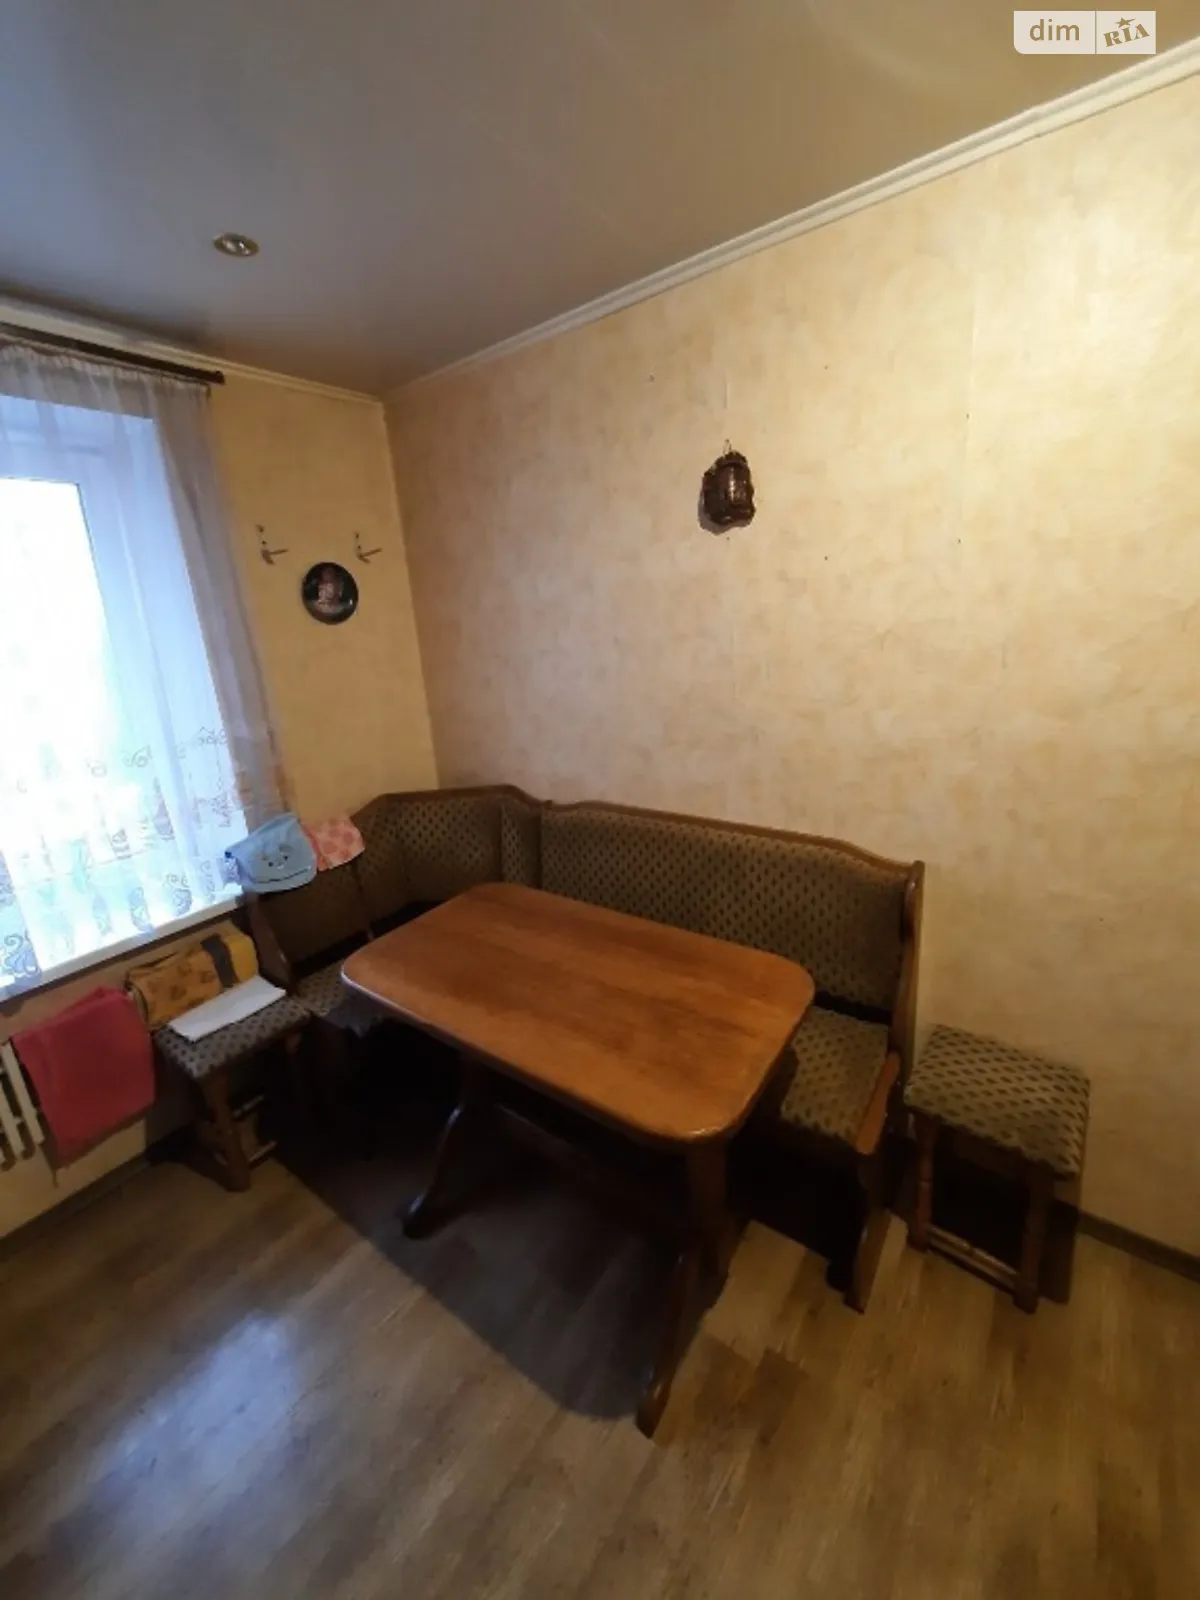 Сдается в аренду комната 25 кв. м в Тернополе - фото 2